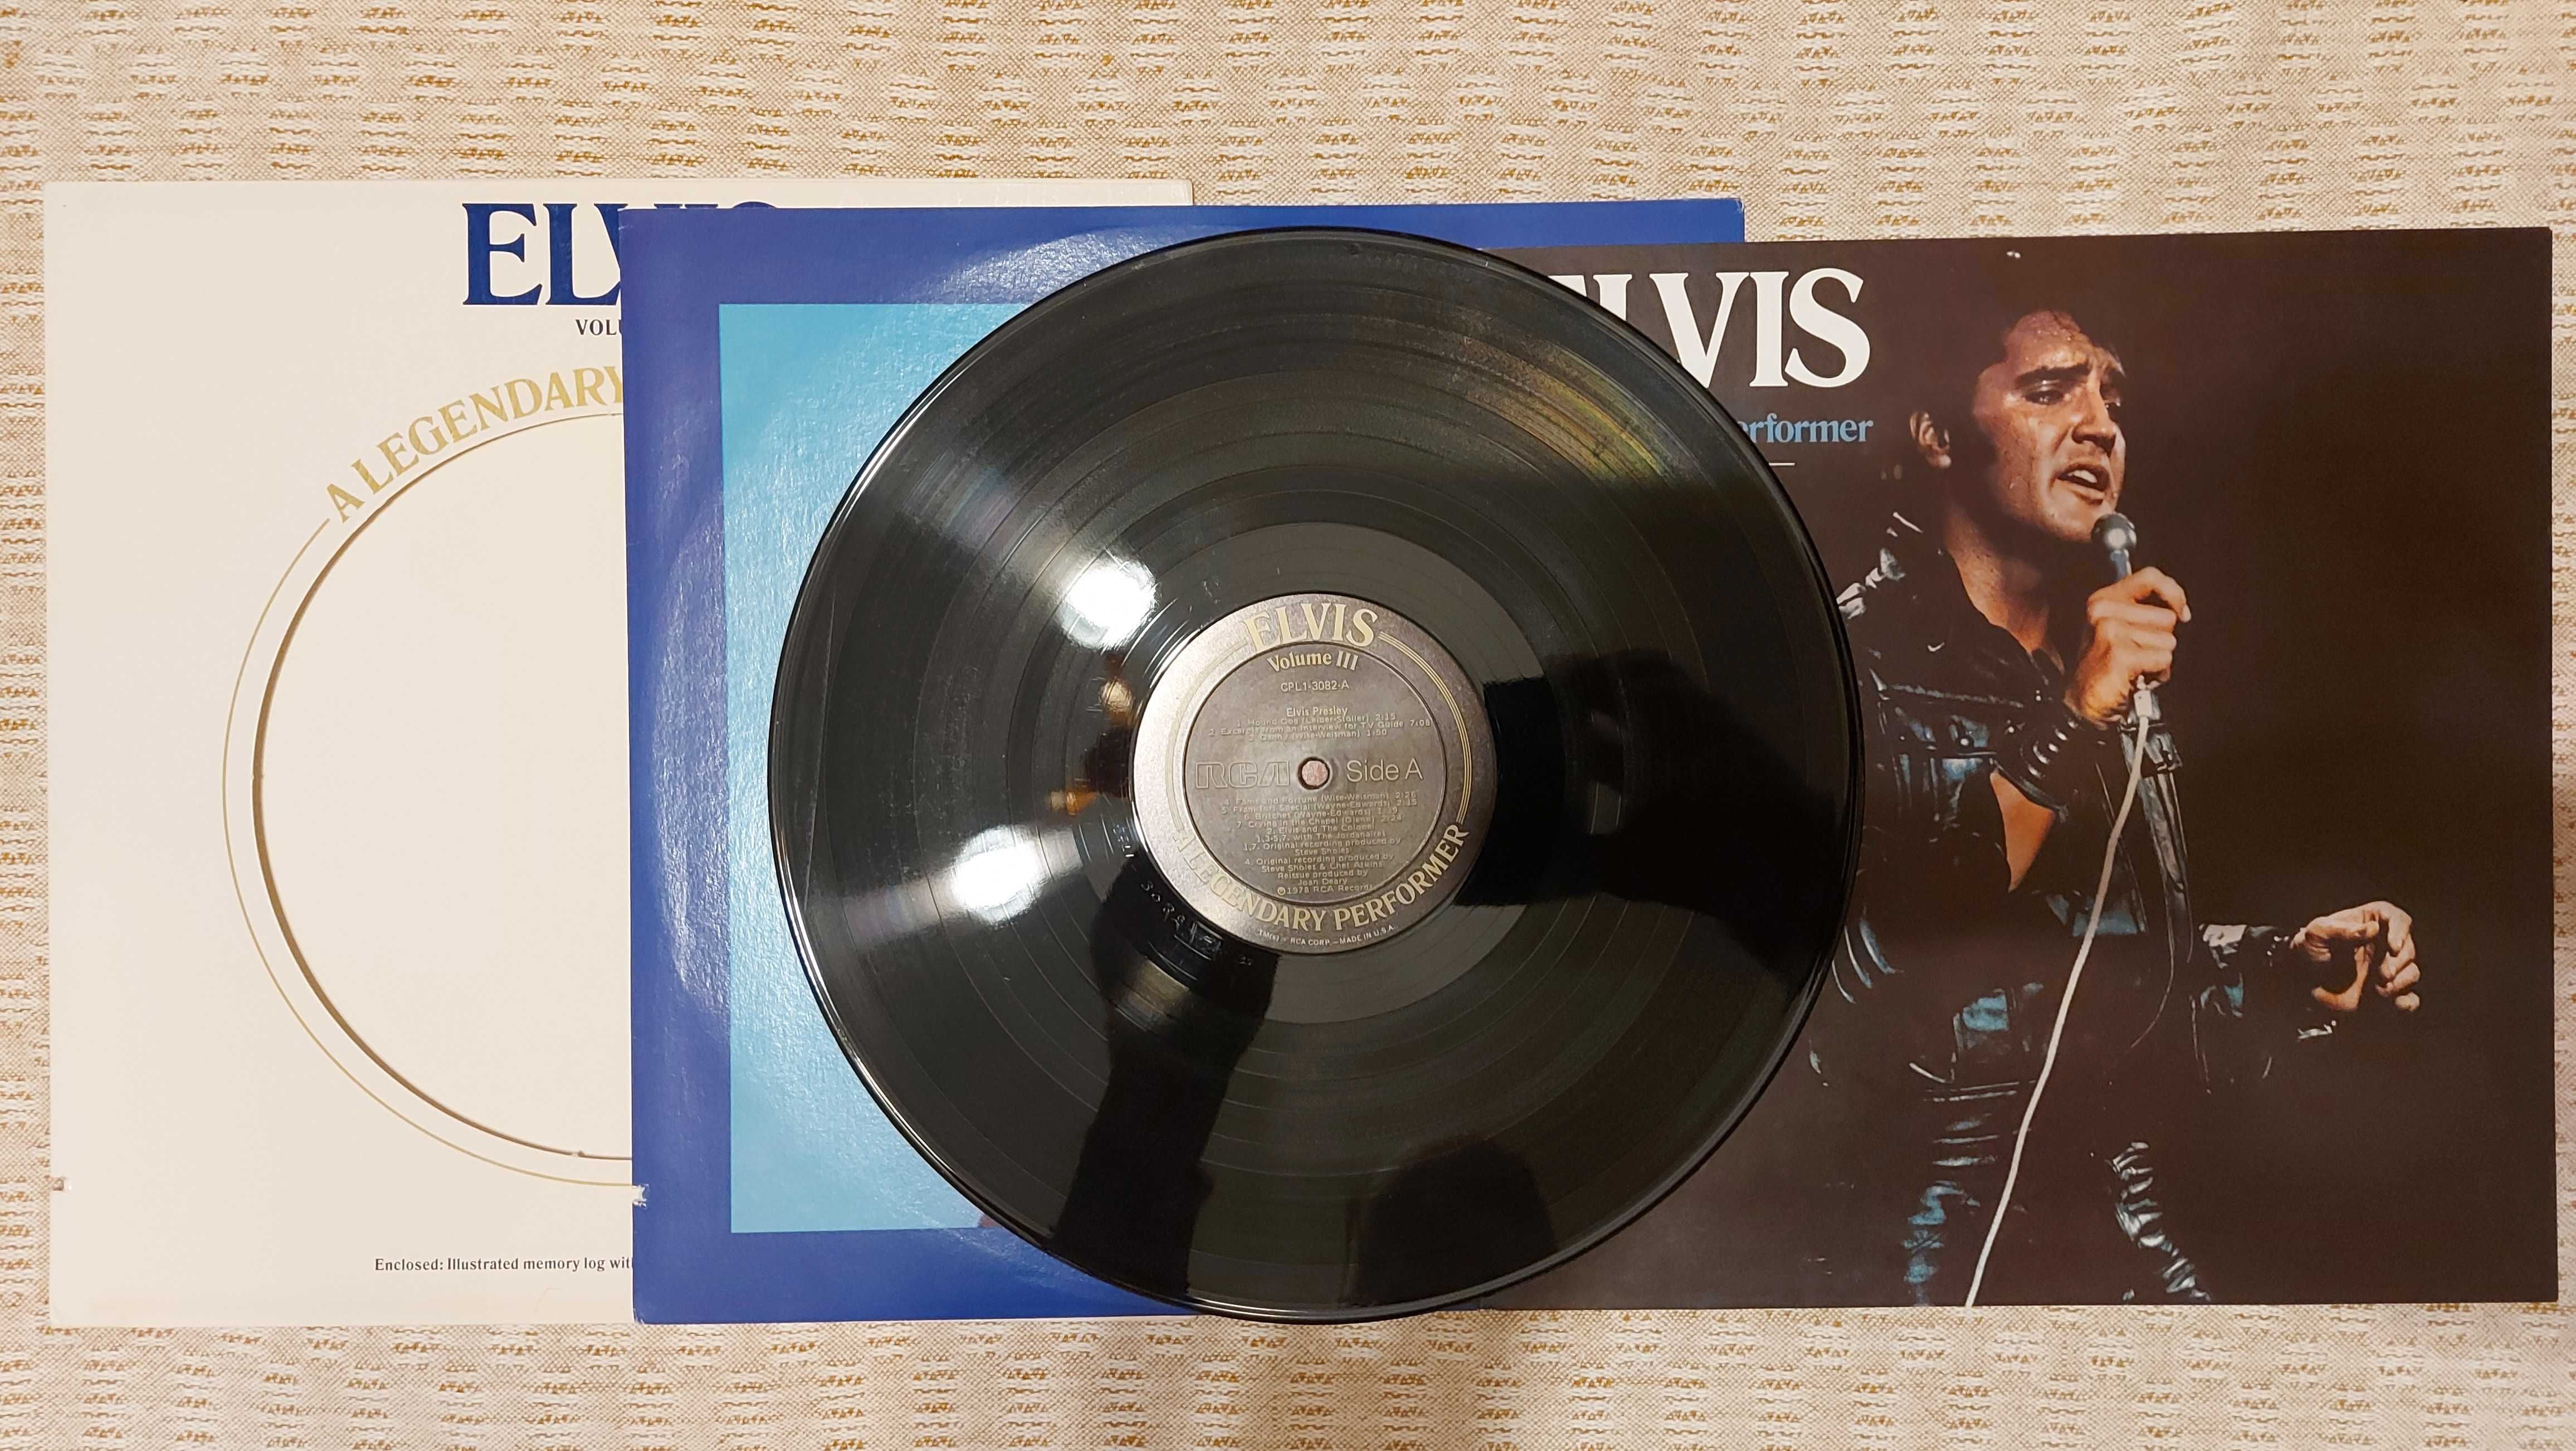 Elvis Presley A Legendary Performer - Volume 3  USA 1978 (EX/NM-)